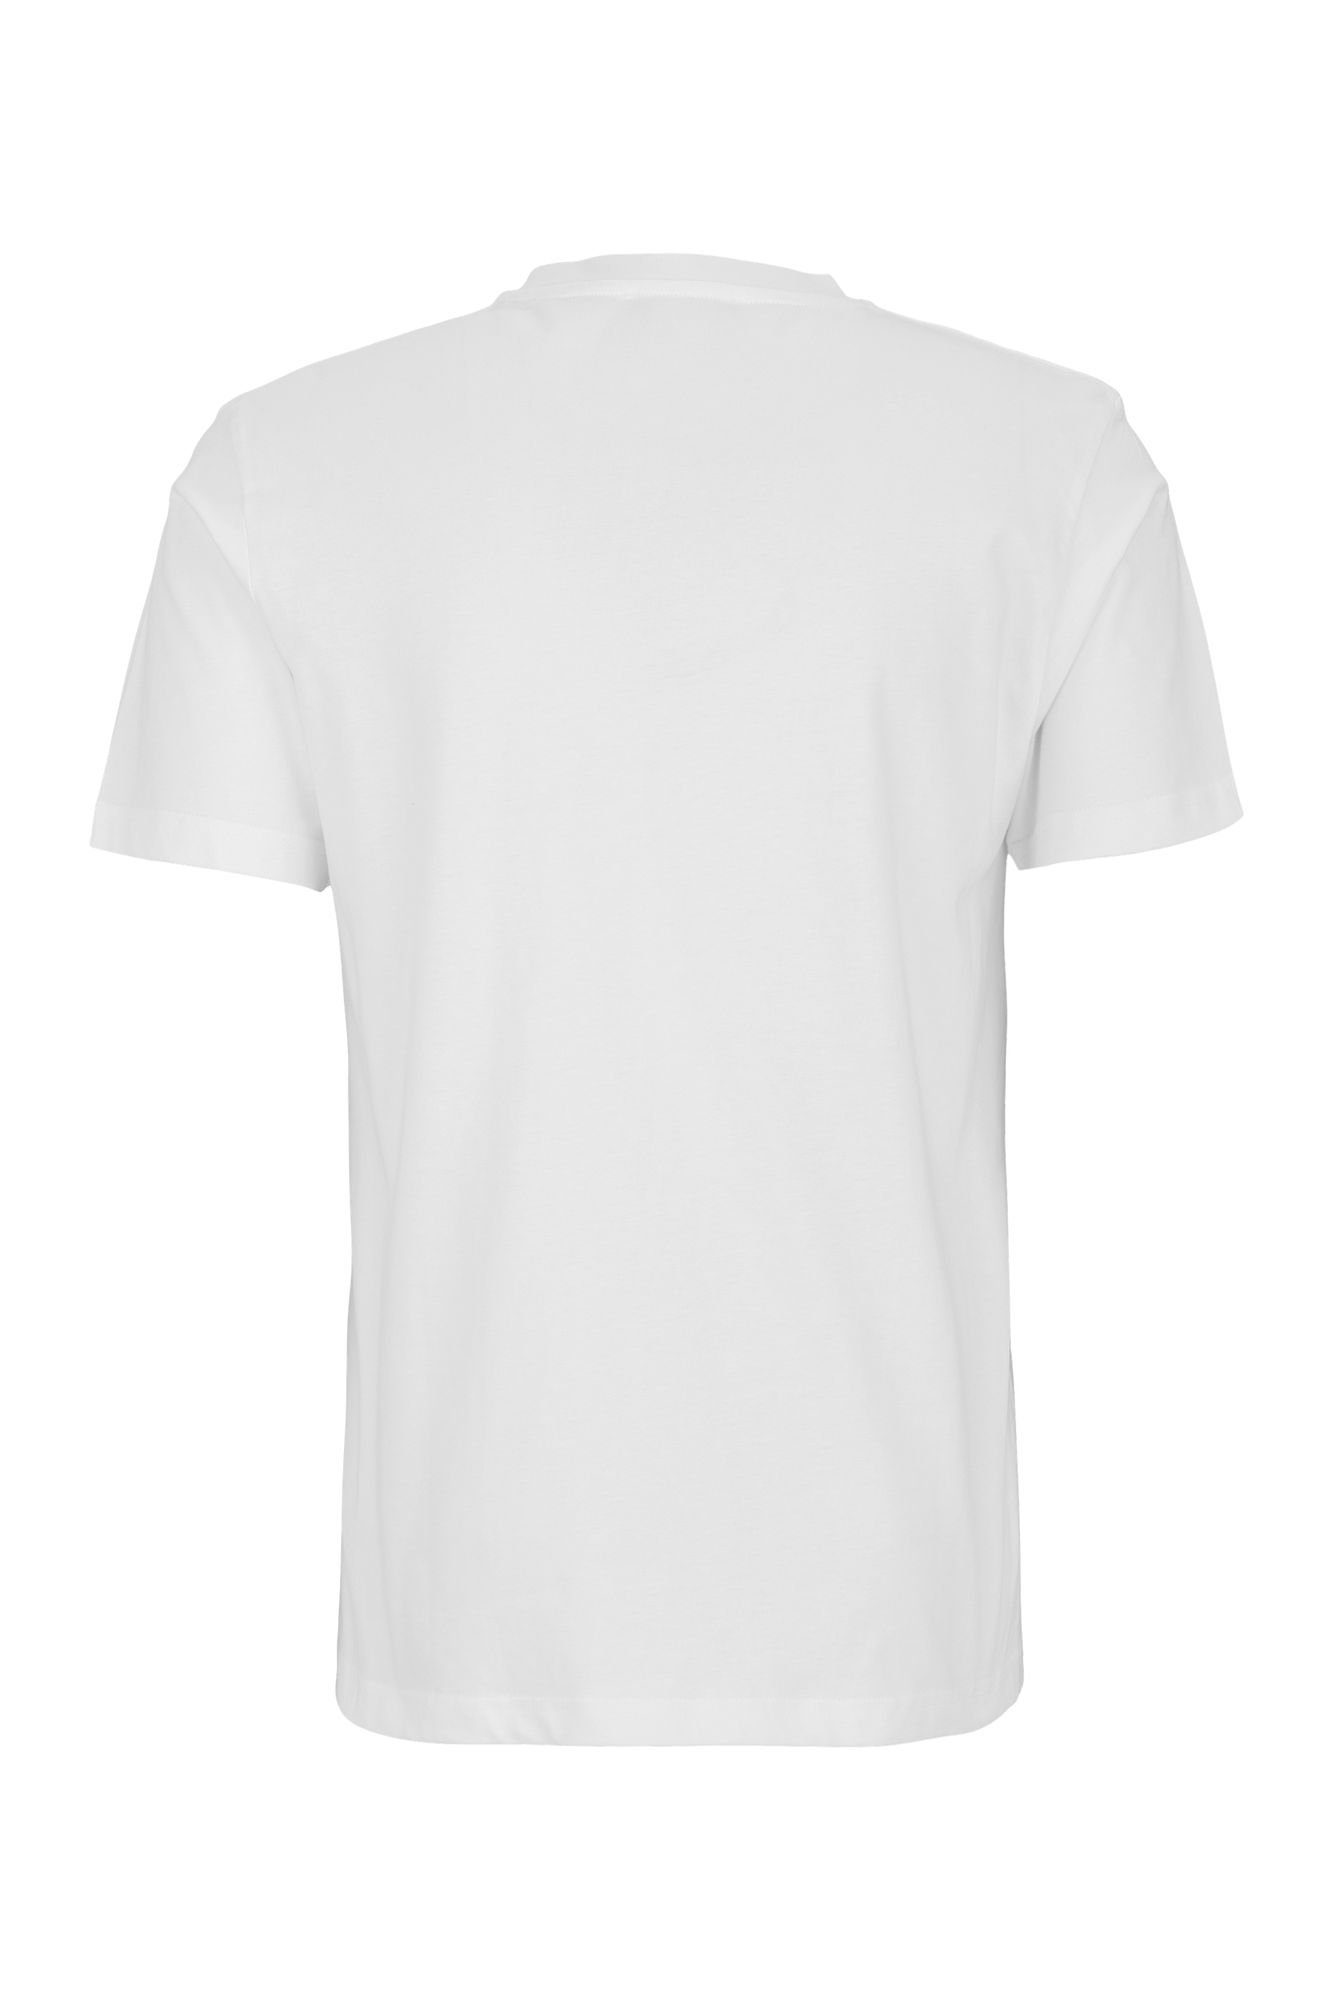 Versace Italia T-Shirt Felix WHITE 19V69 by